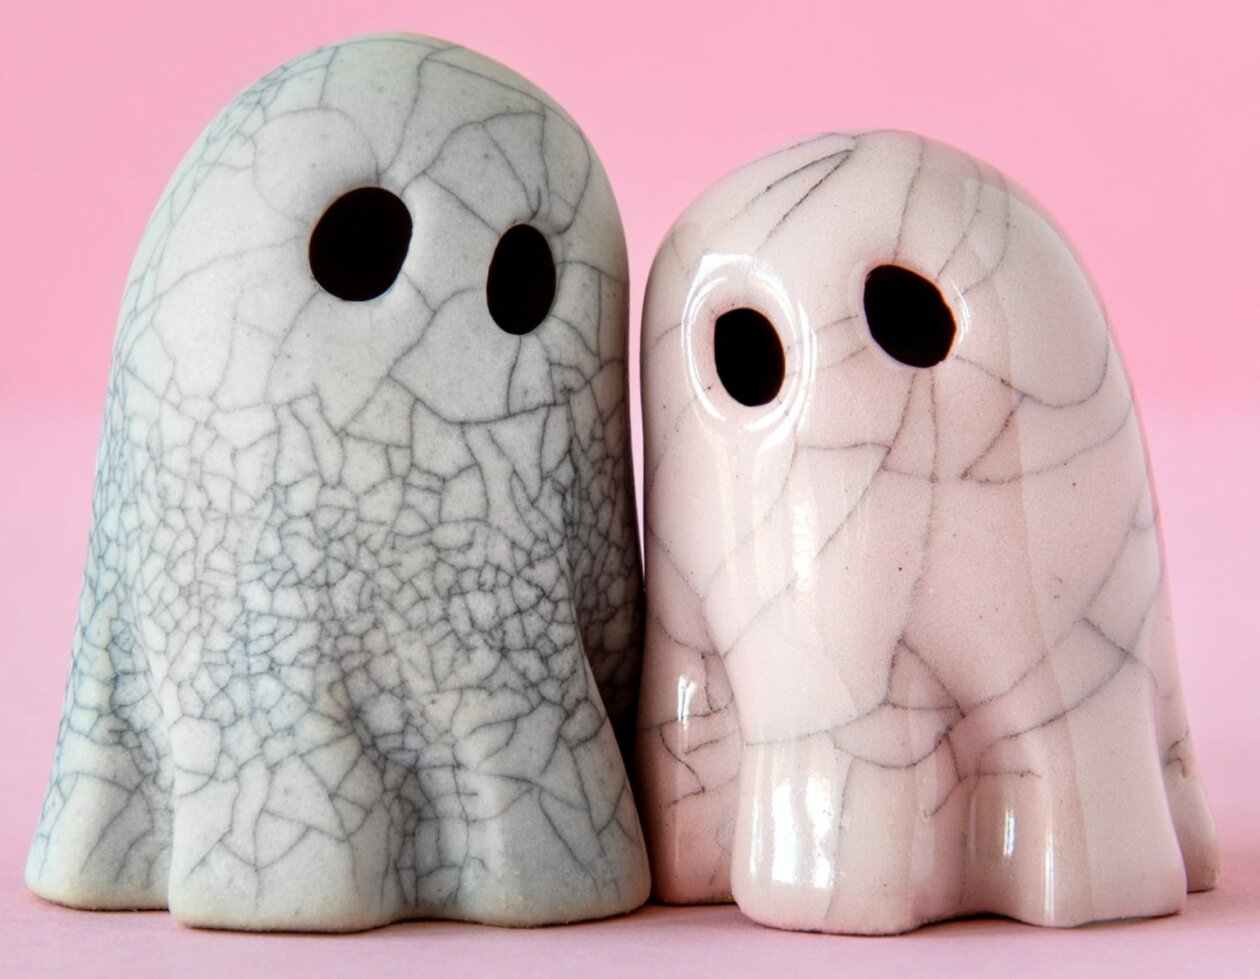 Fun Tiny Ceramic Ghosts By Lisa Agnetun (3)